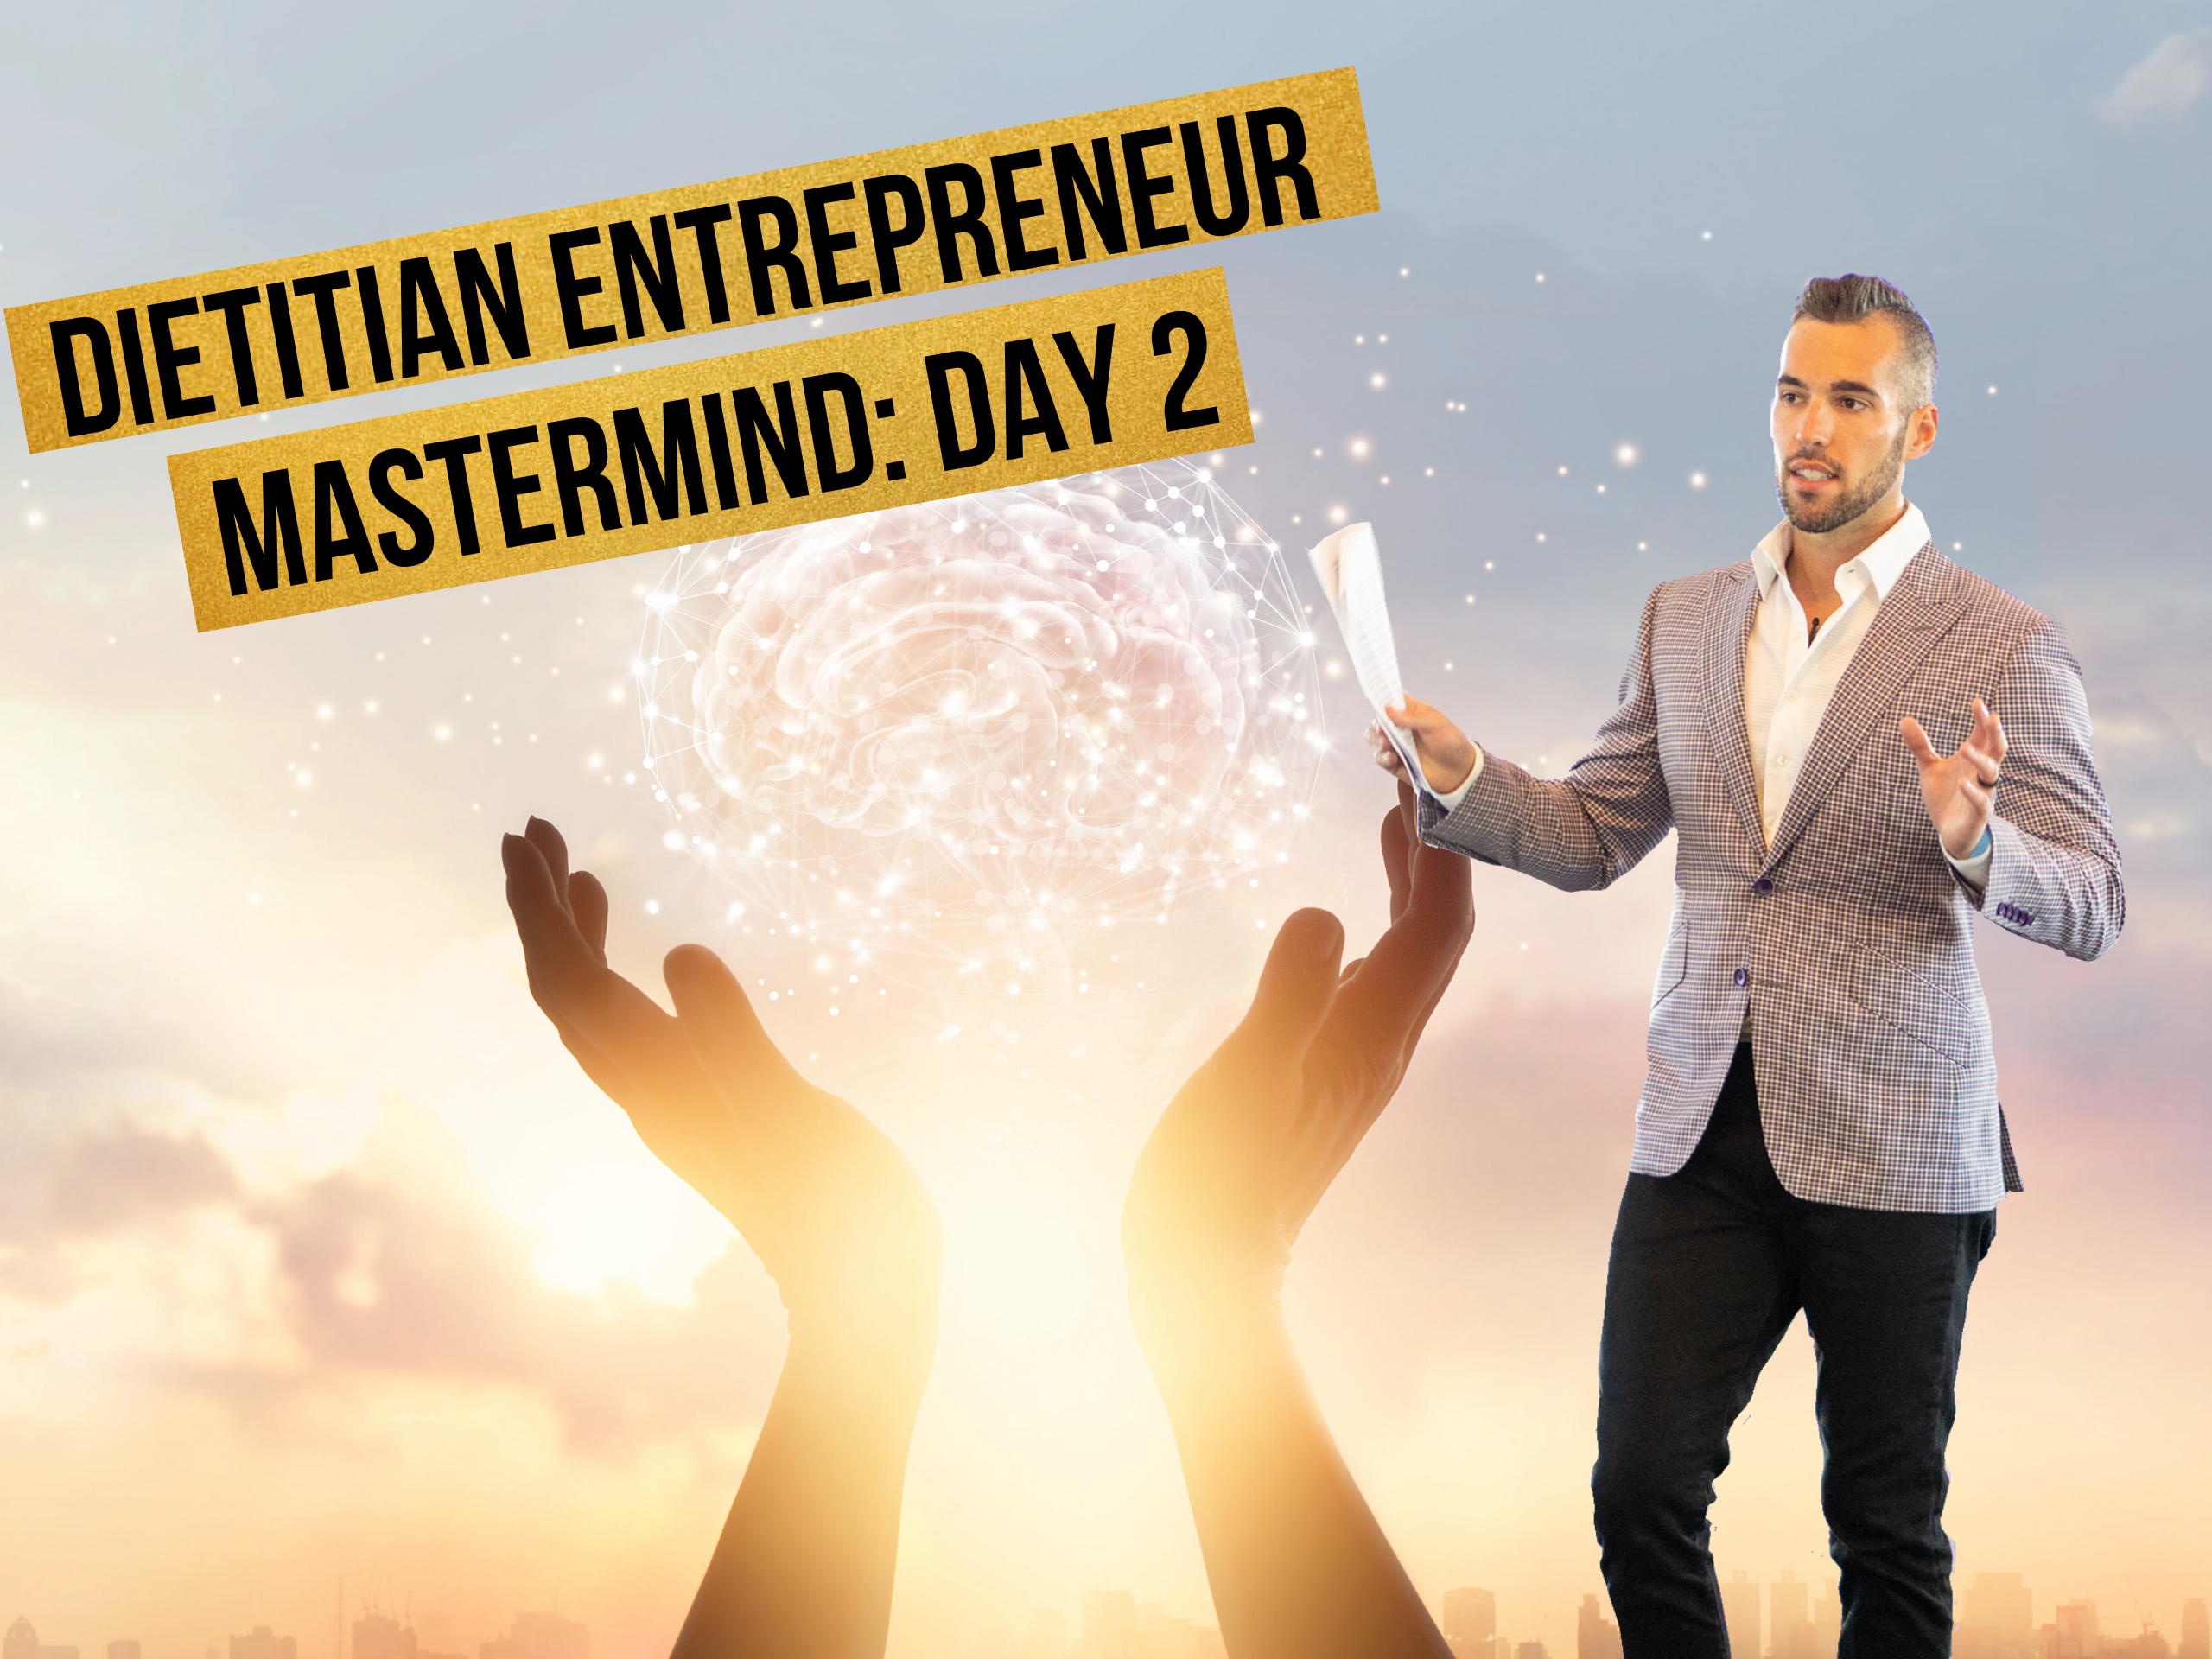 Dietitian Entrepreneur Mastermind Day 2